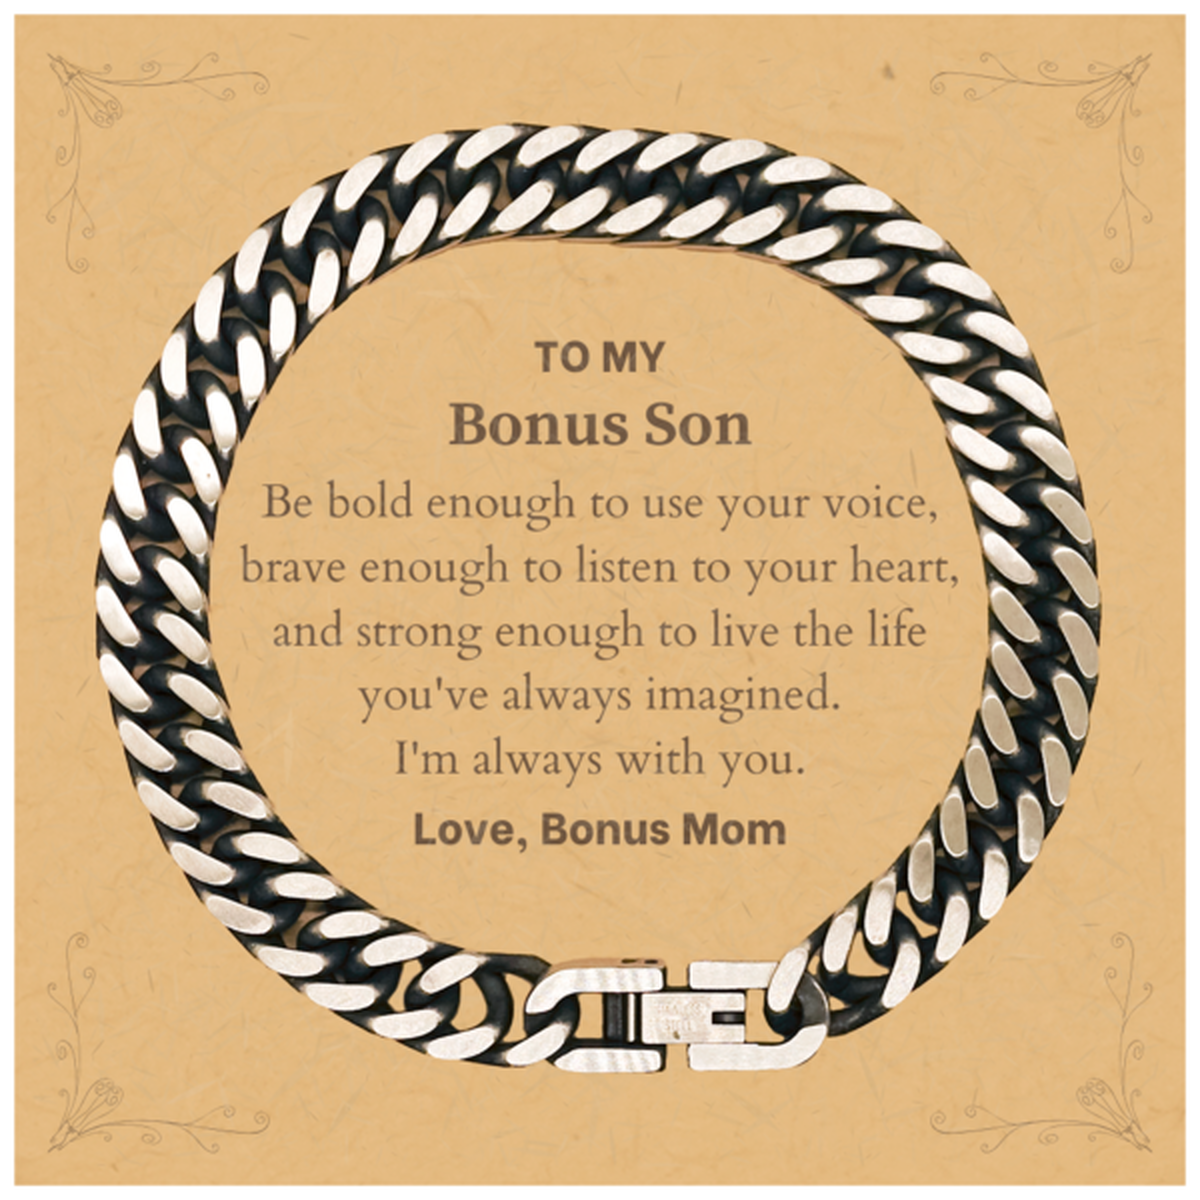 Keepsake Bonus Son Cuban Link Chain Bracelet Gift Idea Graduation Christmas Birthday Bonus Son from Bonus Mom, Bonus Son Be bold enough to use your voice, brave enough to listen to your heart. Love, Bonus Mom